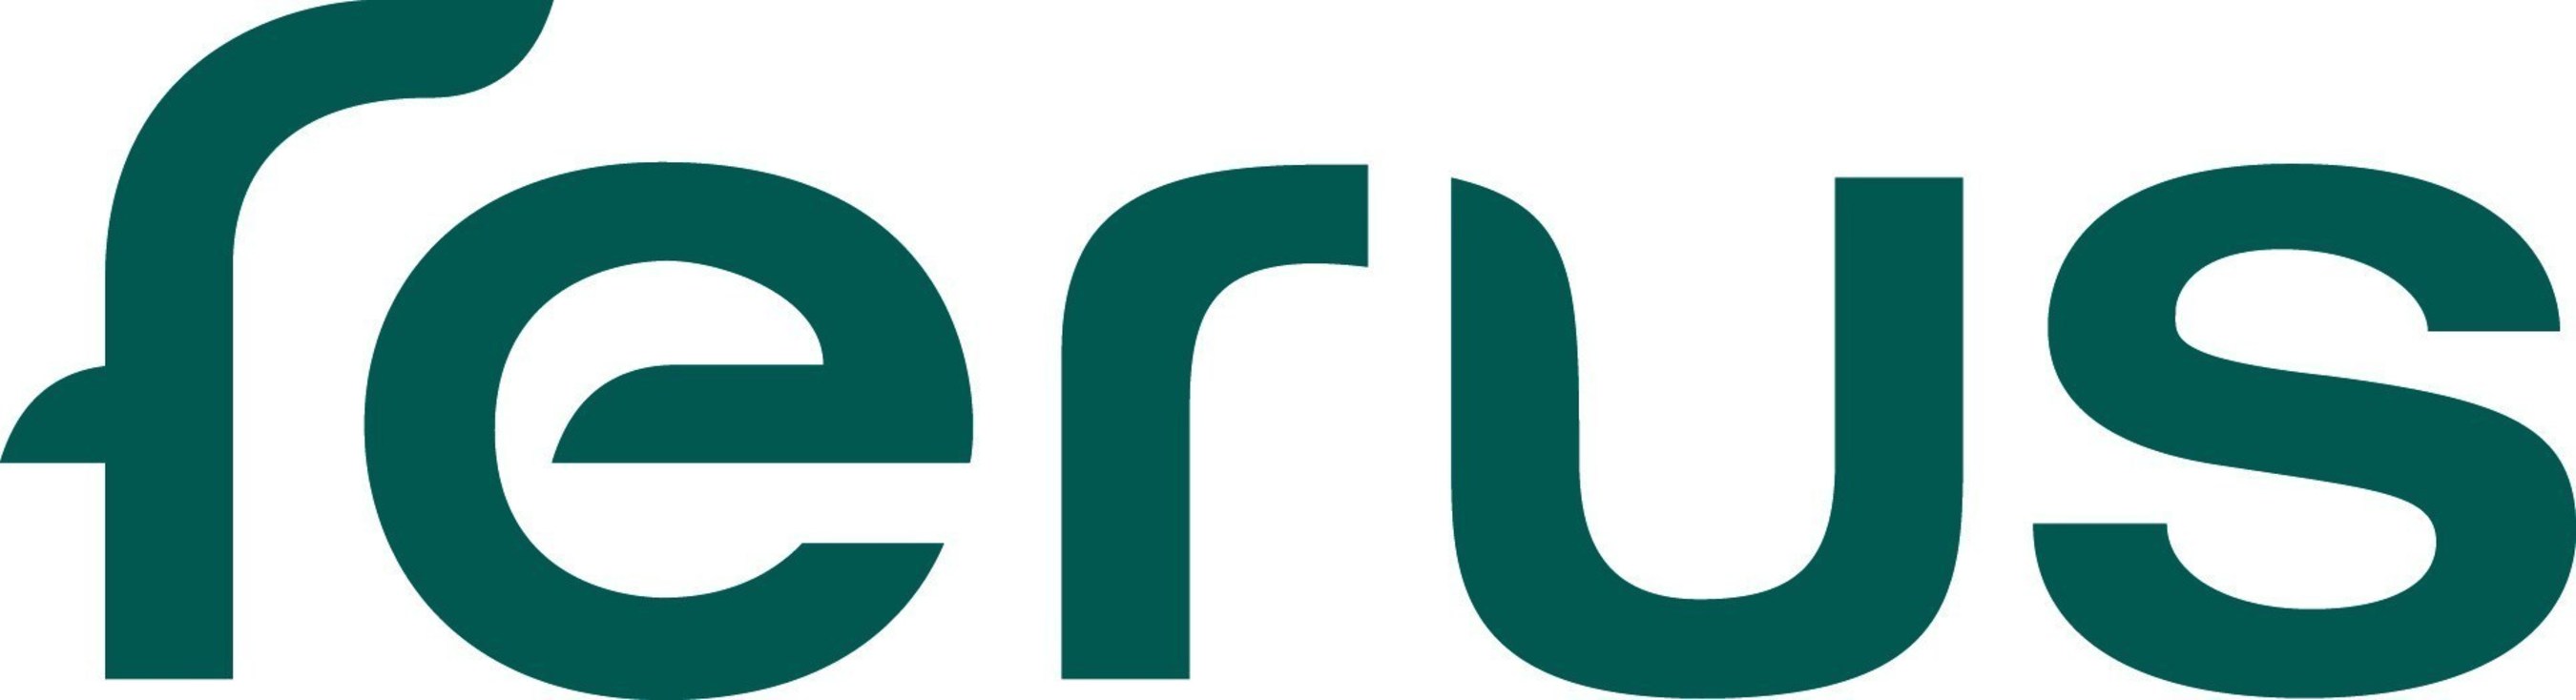 Ferus logo